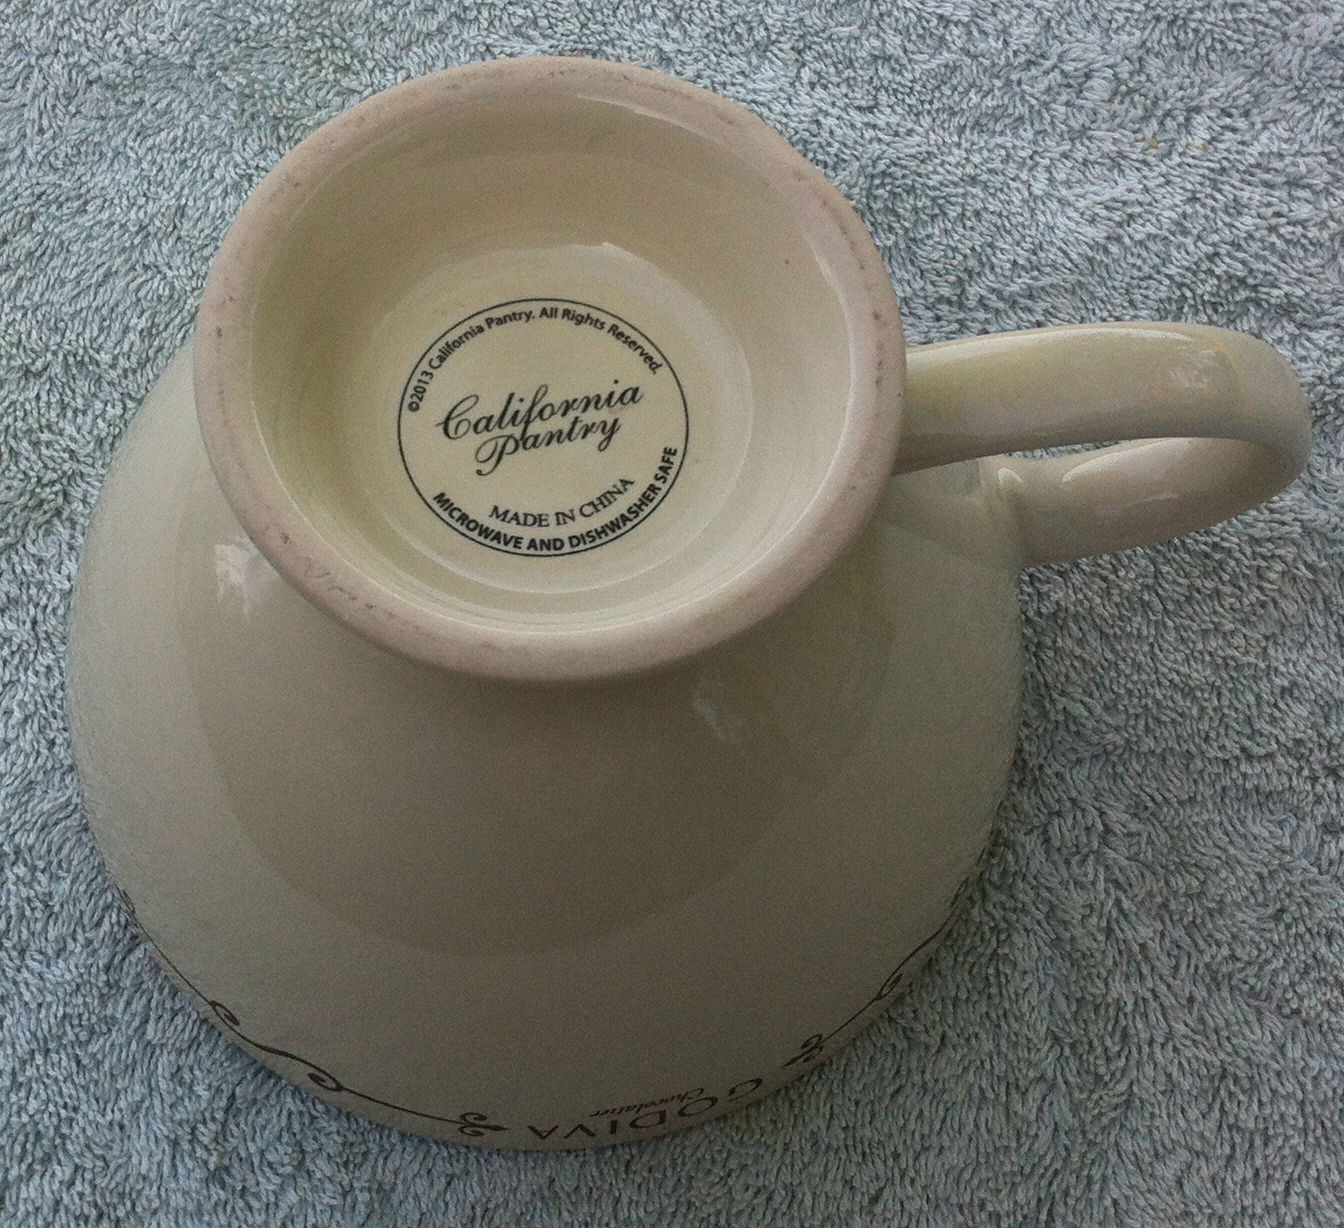 California Pantry Godiva coffee mug - $10.00